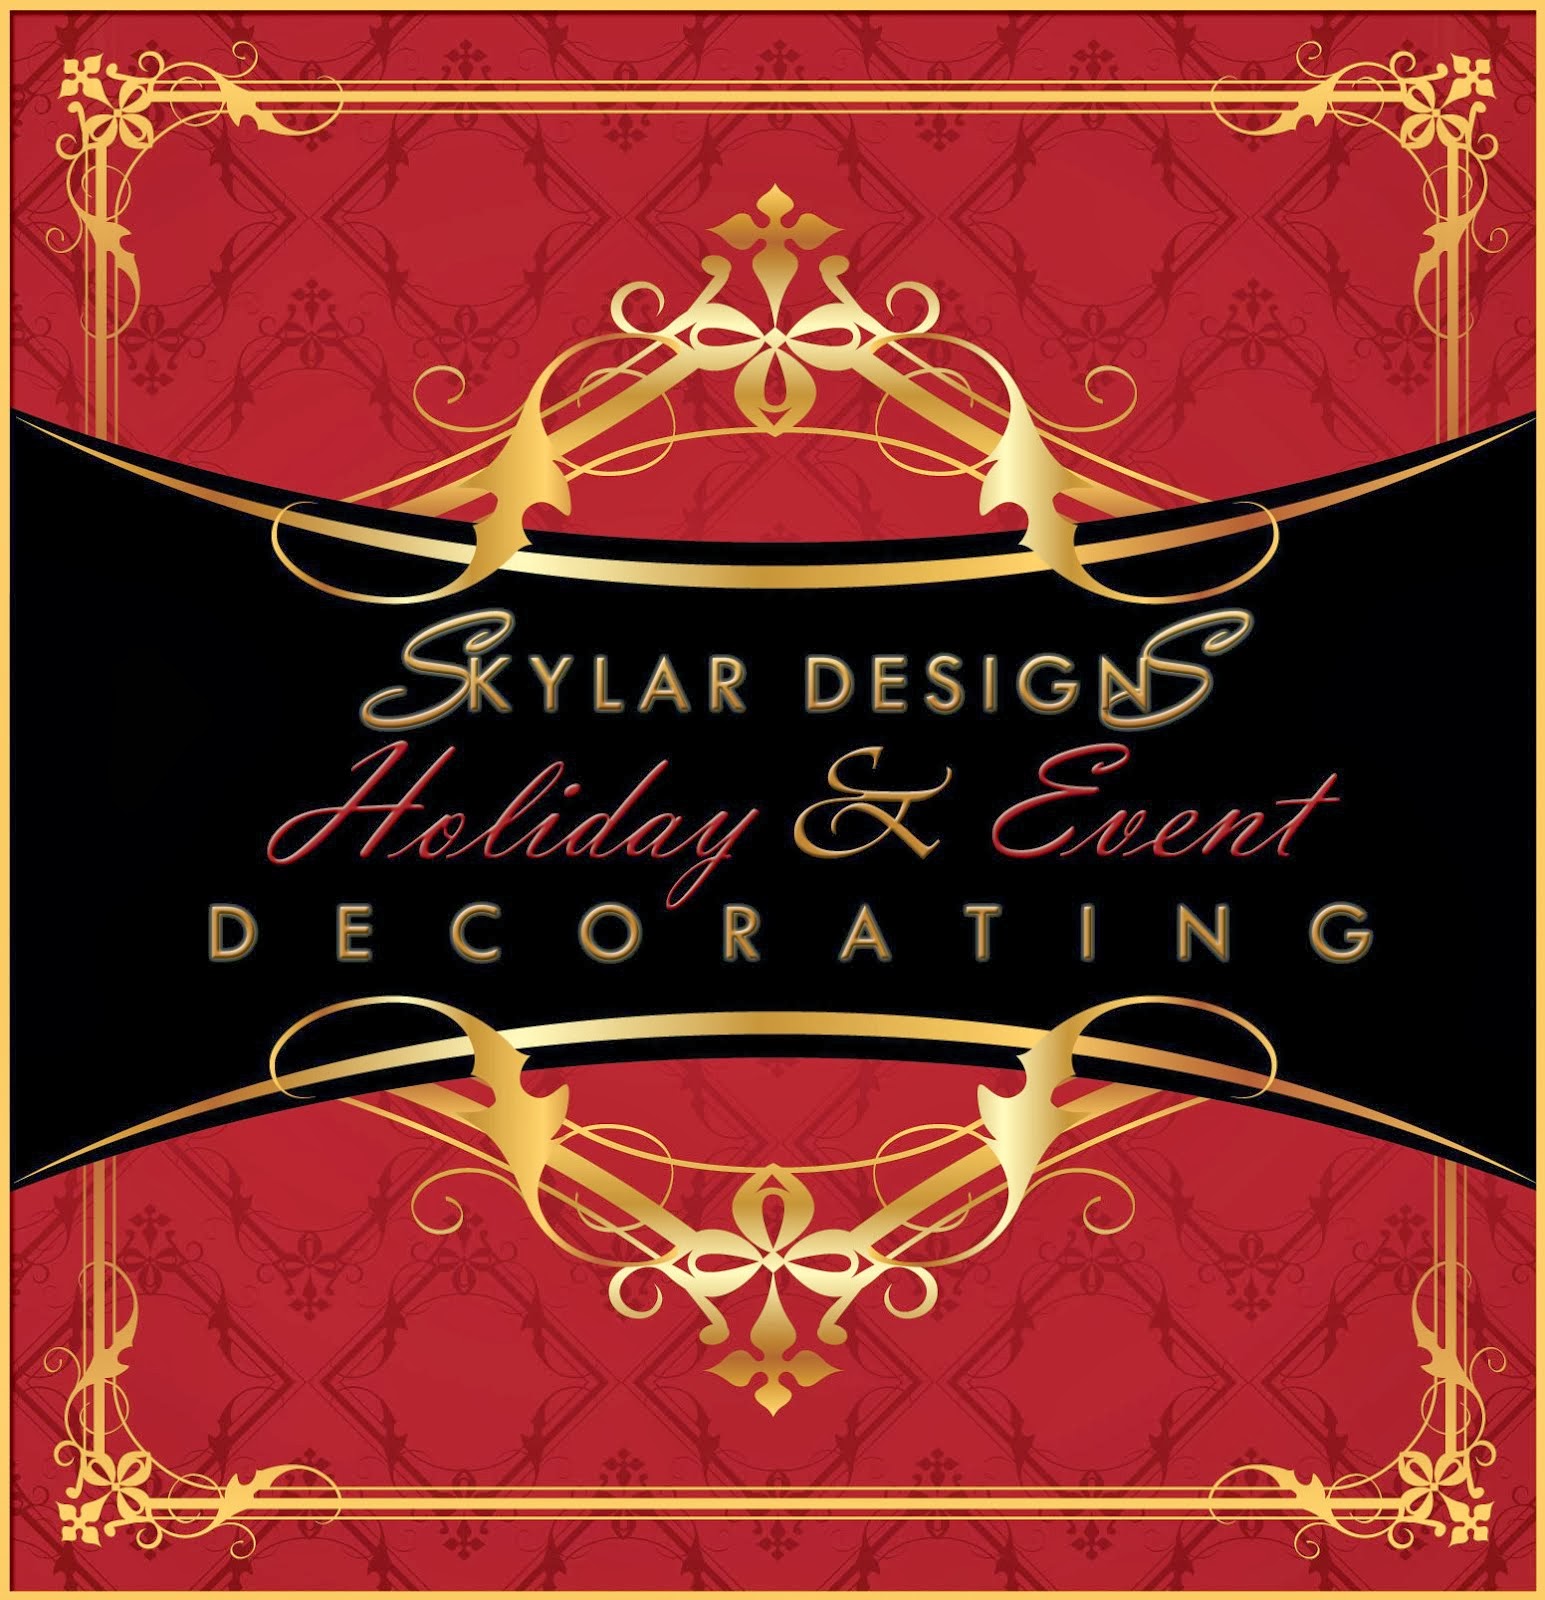 Skylar Designs